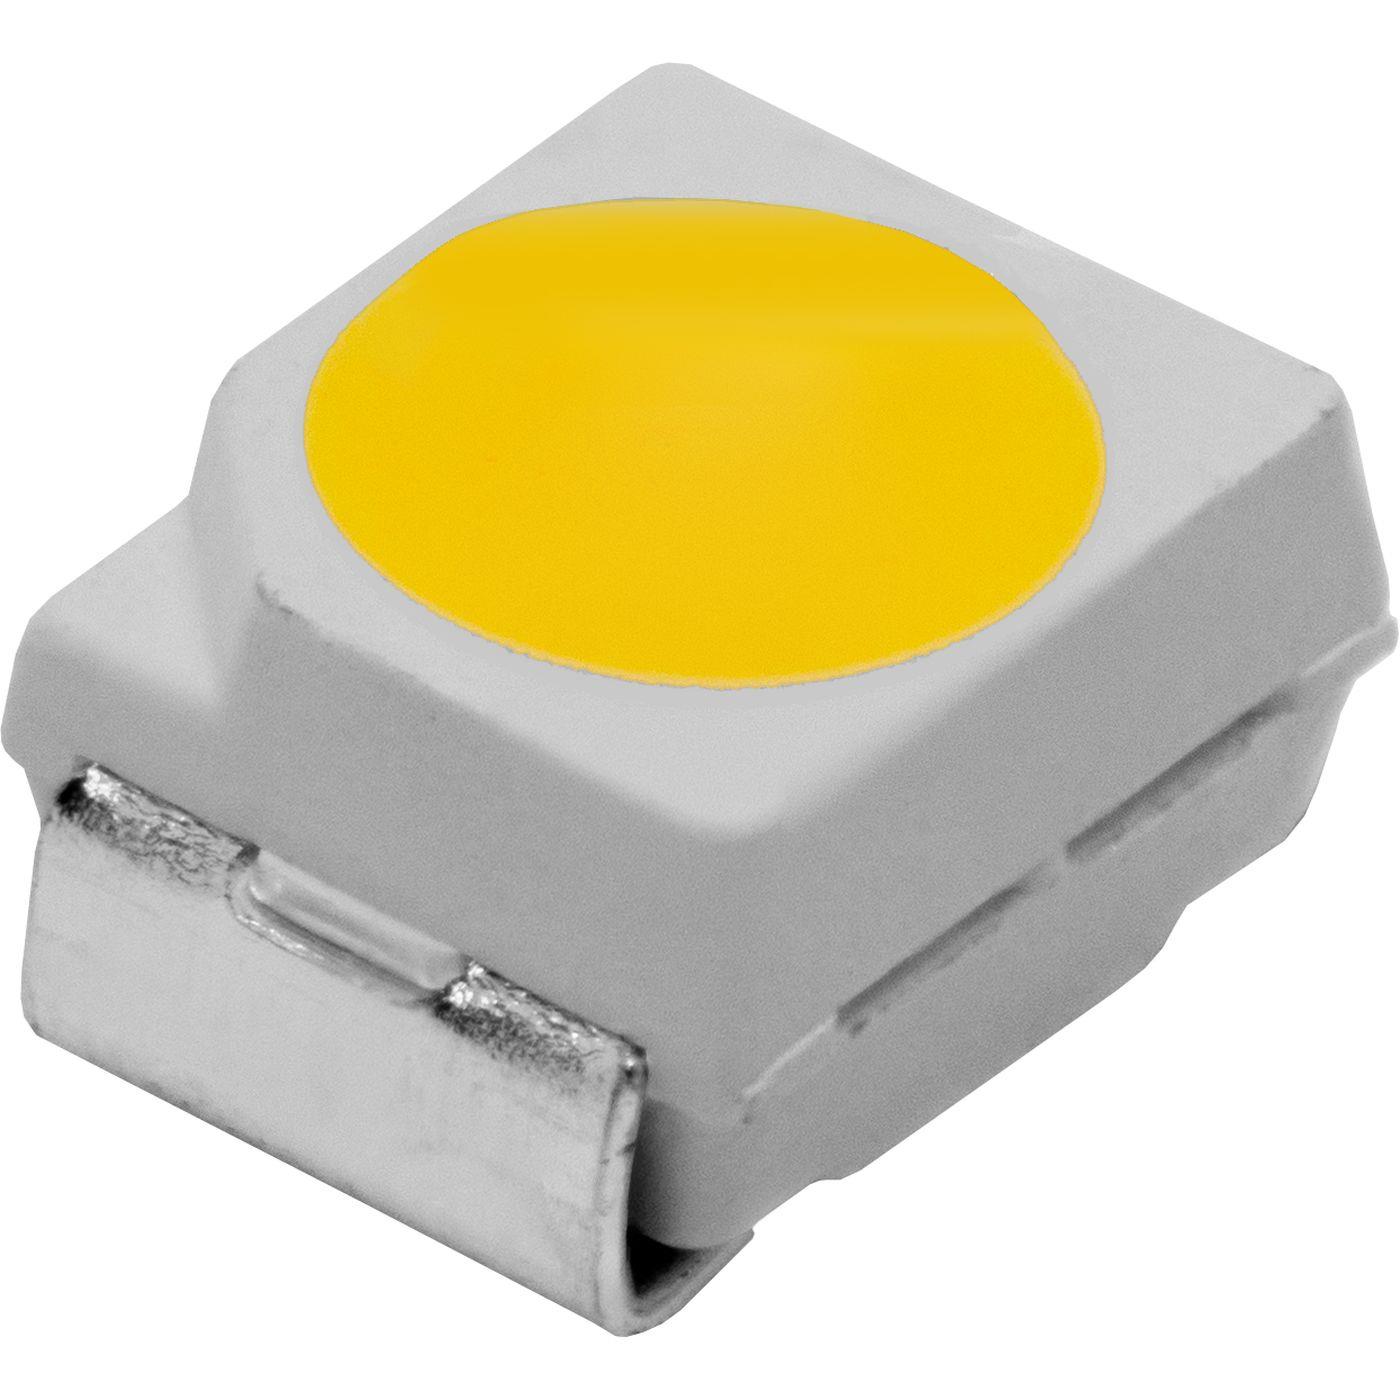 50x Superhelle LEDs SMD 3528 Neutral Weiß 4500K 20mA 3,2V 1700...2200mcd 120° 3,5x2,8mm PLCC2